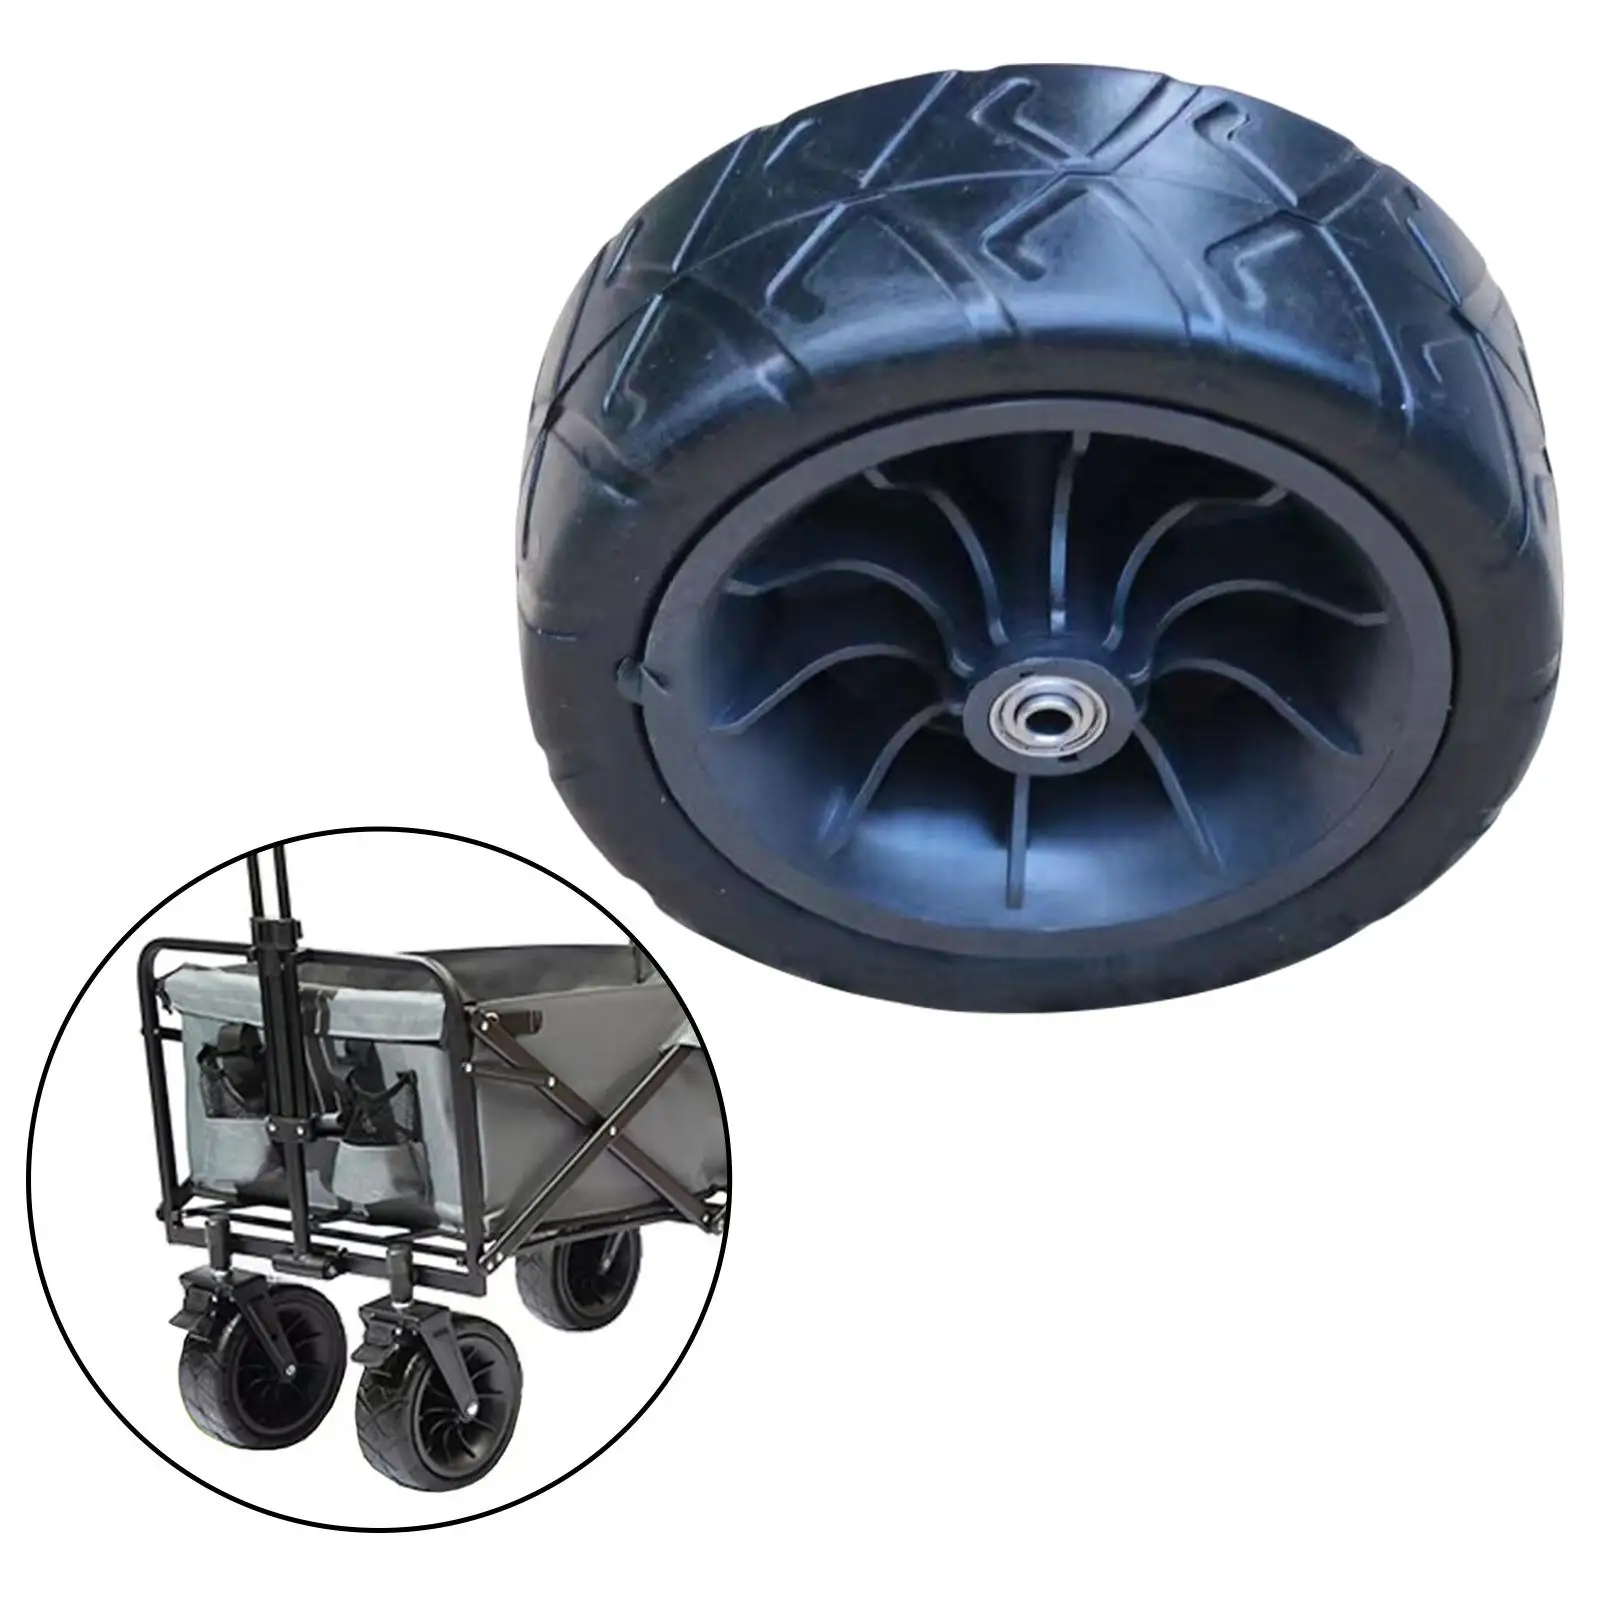 Replacement Wheel for Wagon Cart Shopping Cart Hand Truck Lawn Mower Wheels